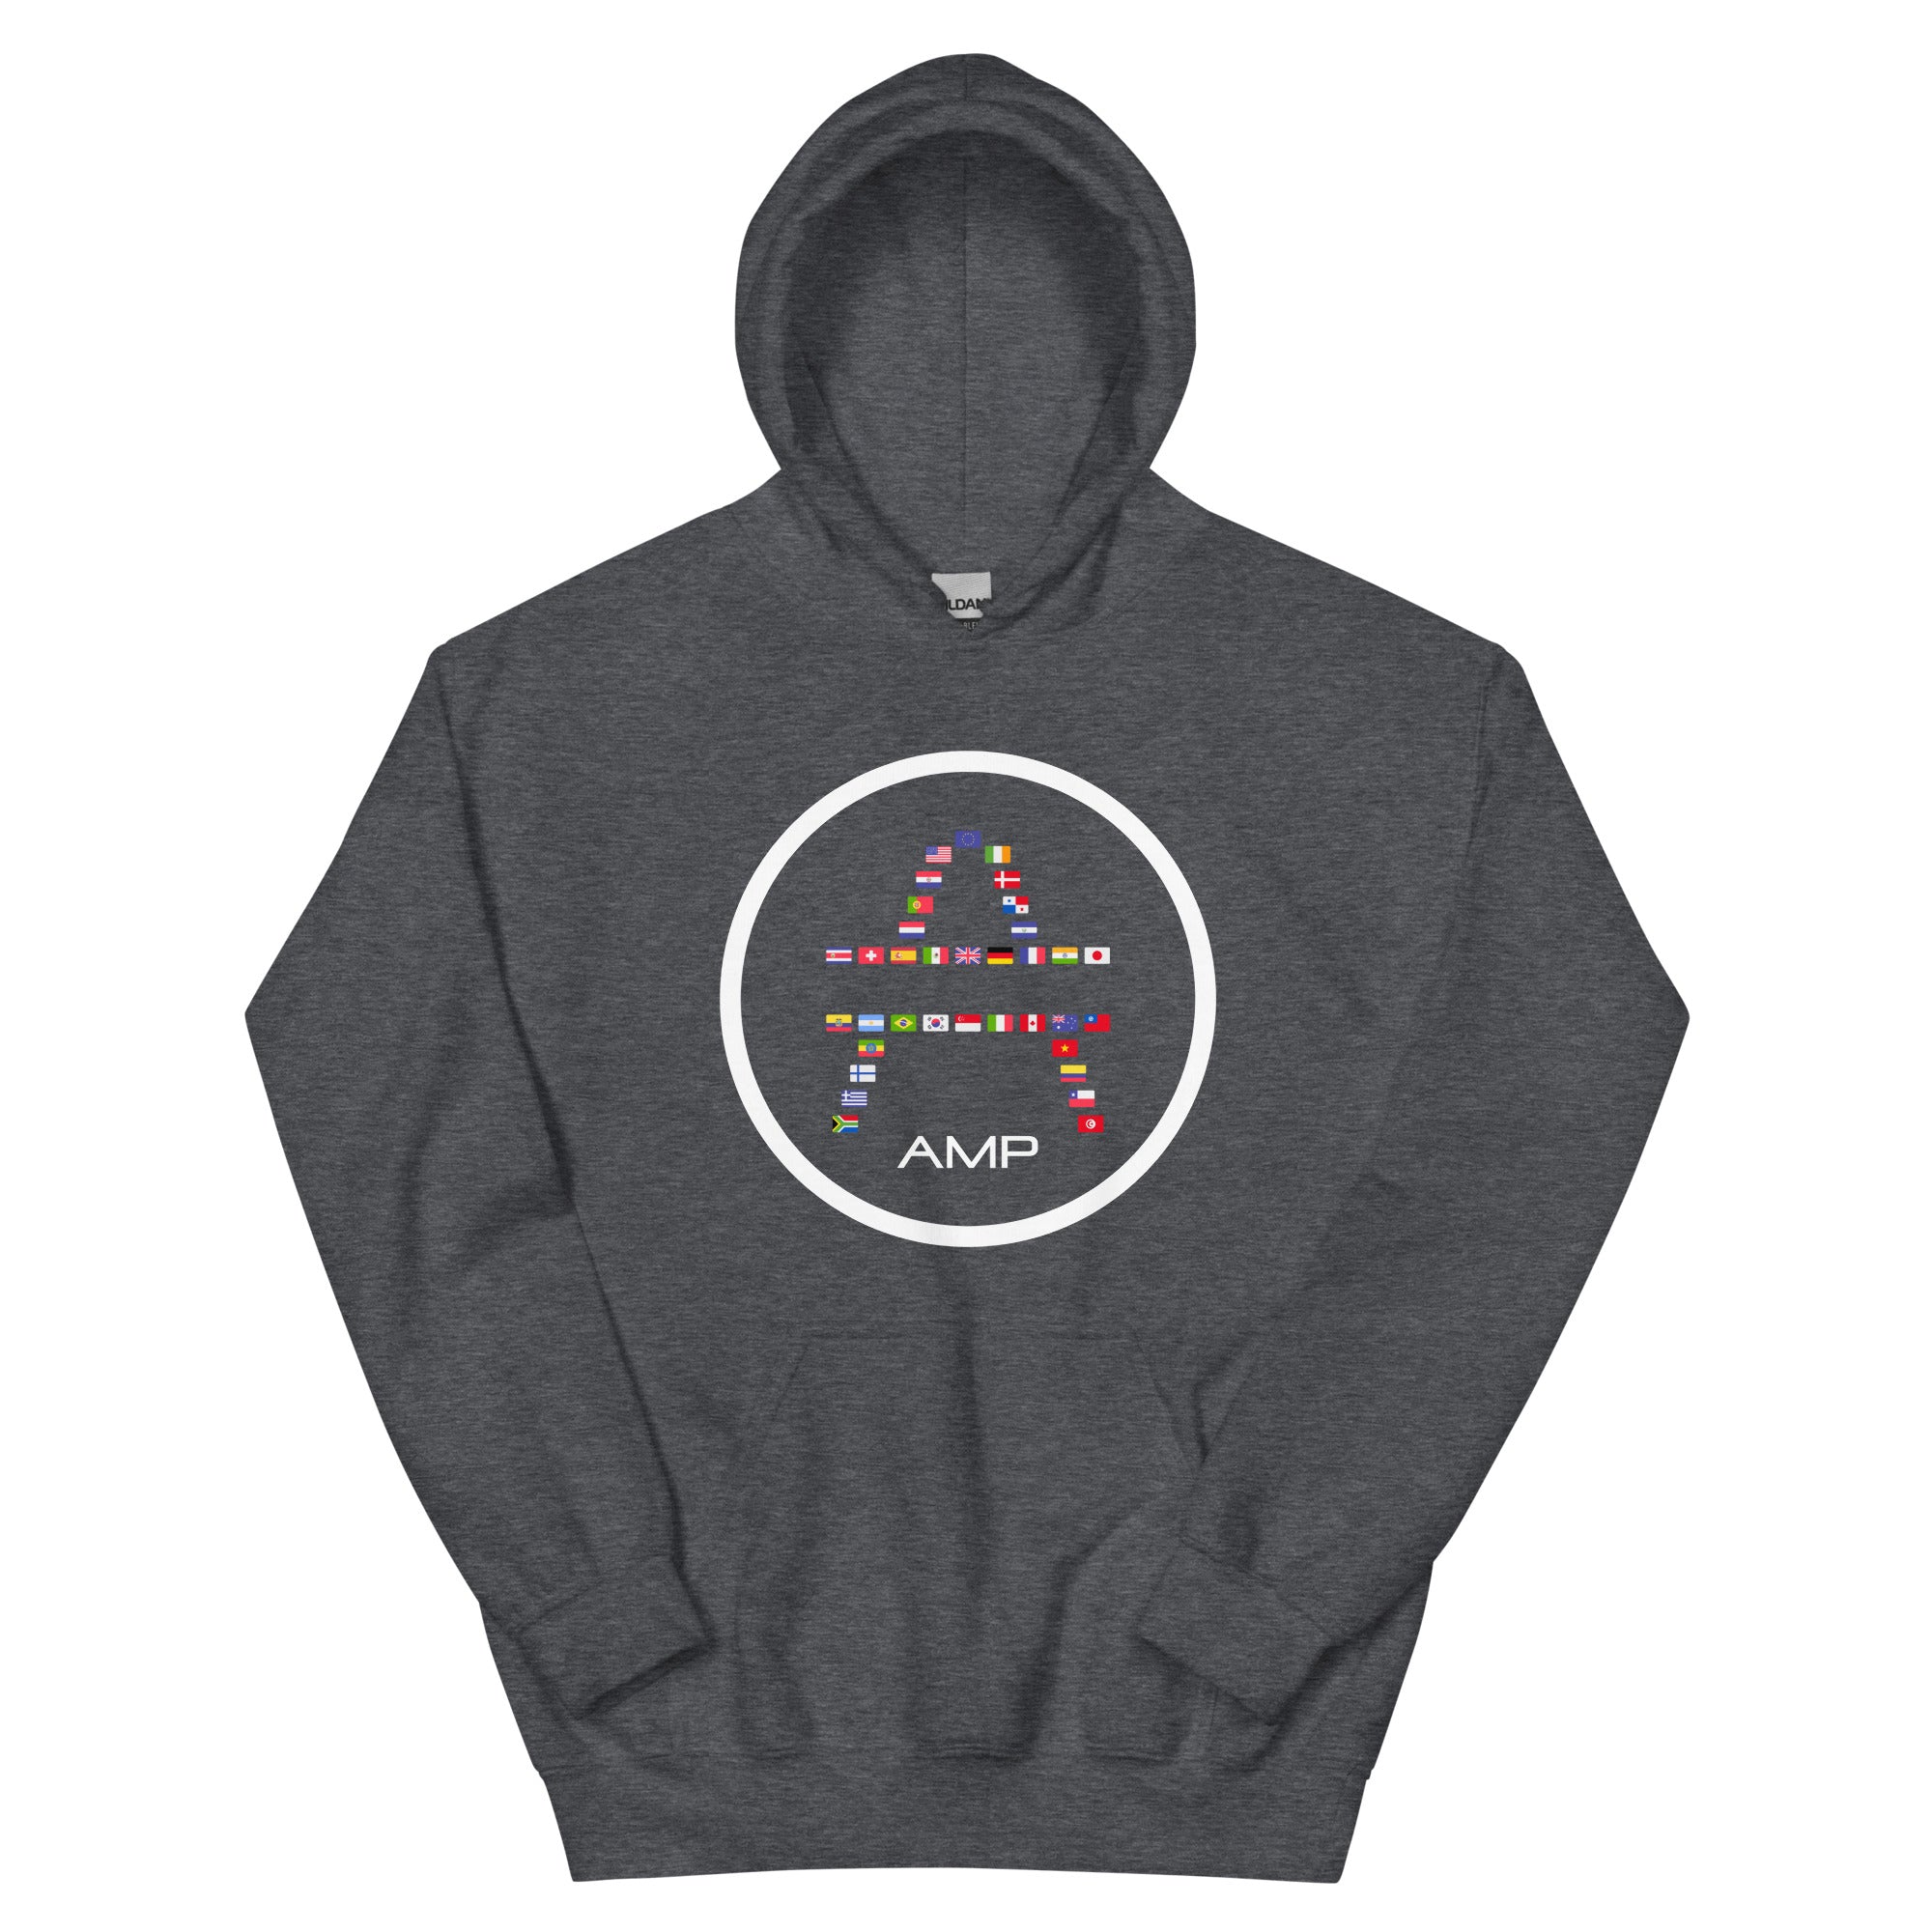 a AMP Swagg Global hoodie in dark grey